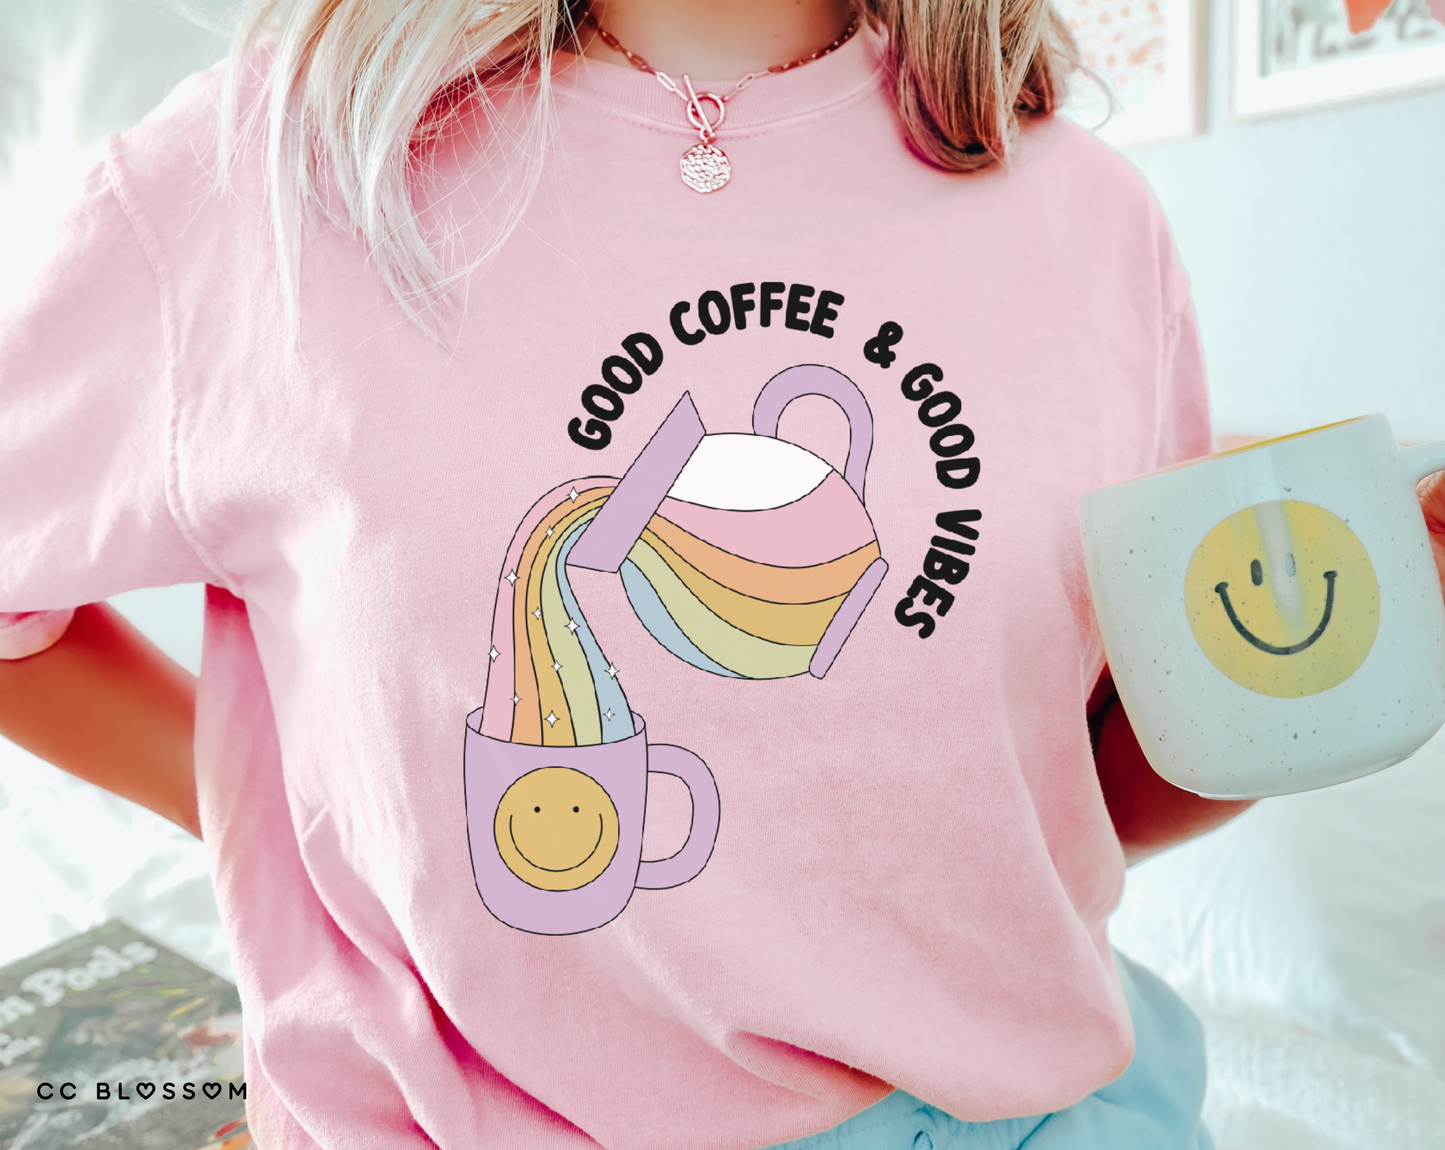 Good Coffee & Good Vibes Screen Print Transfer